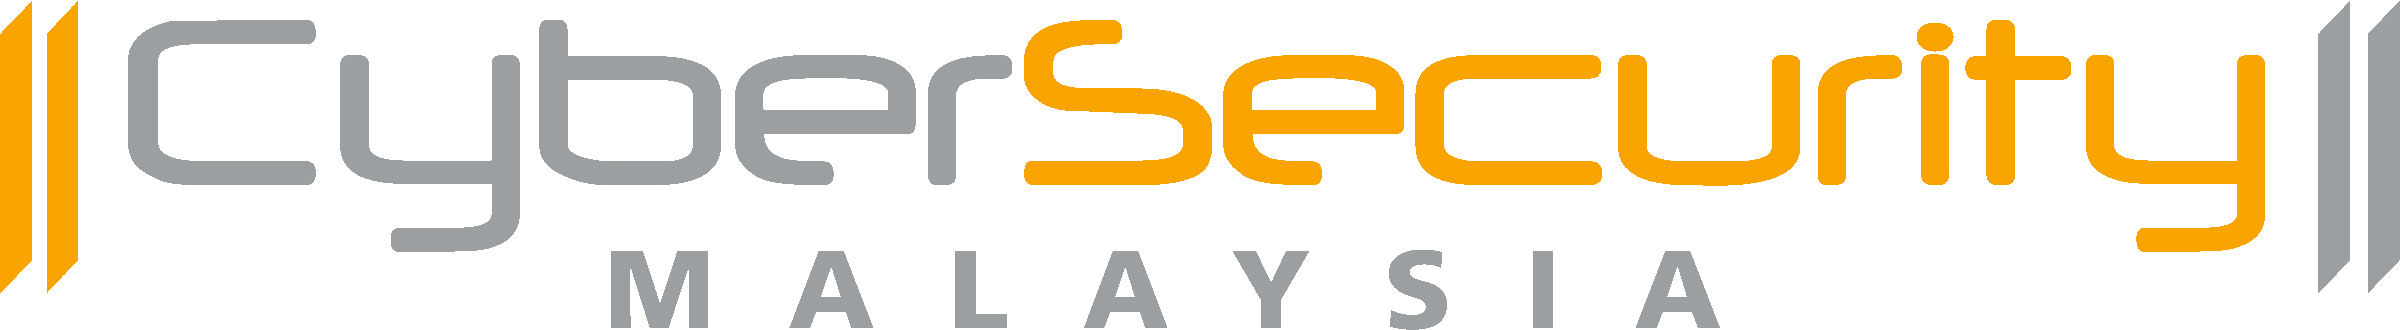 csm-logo